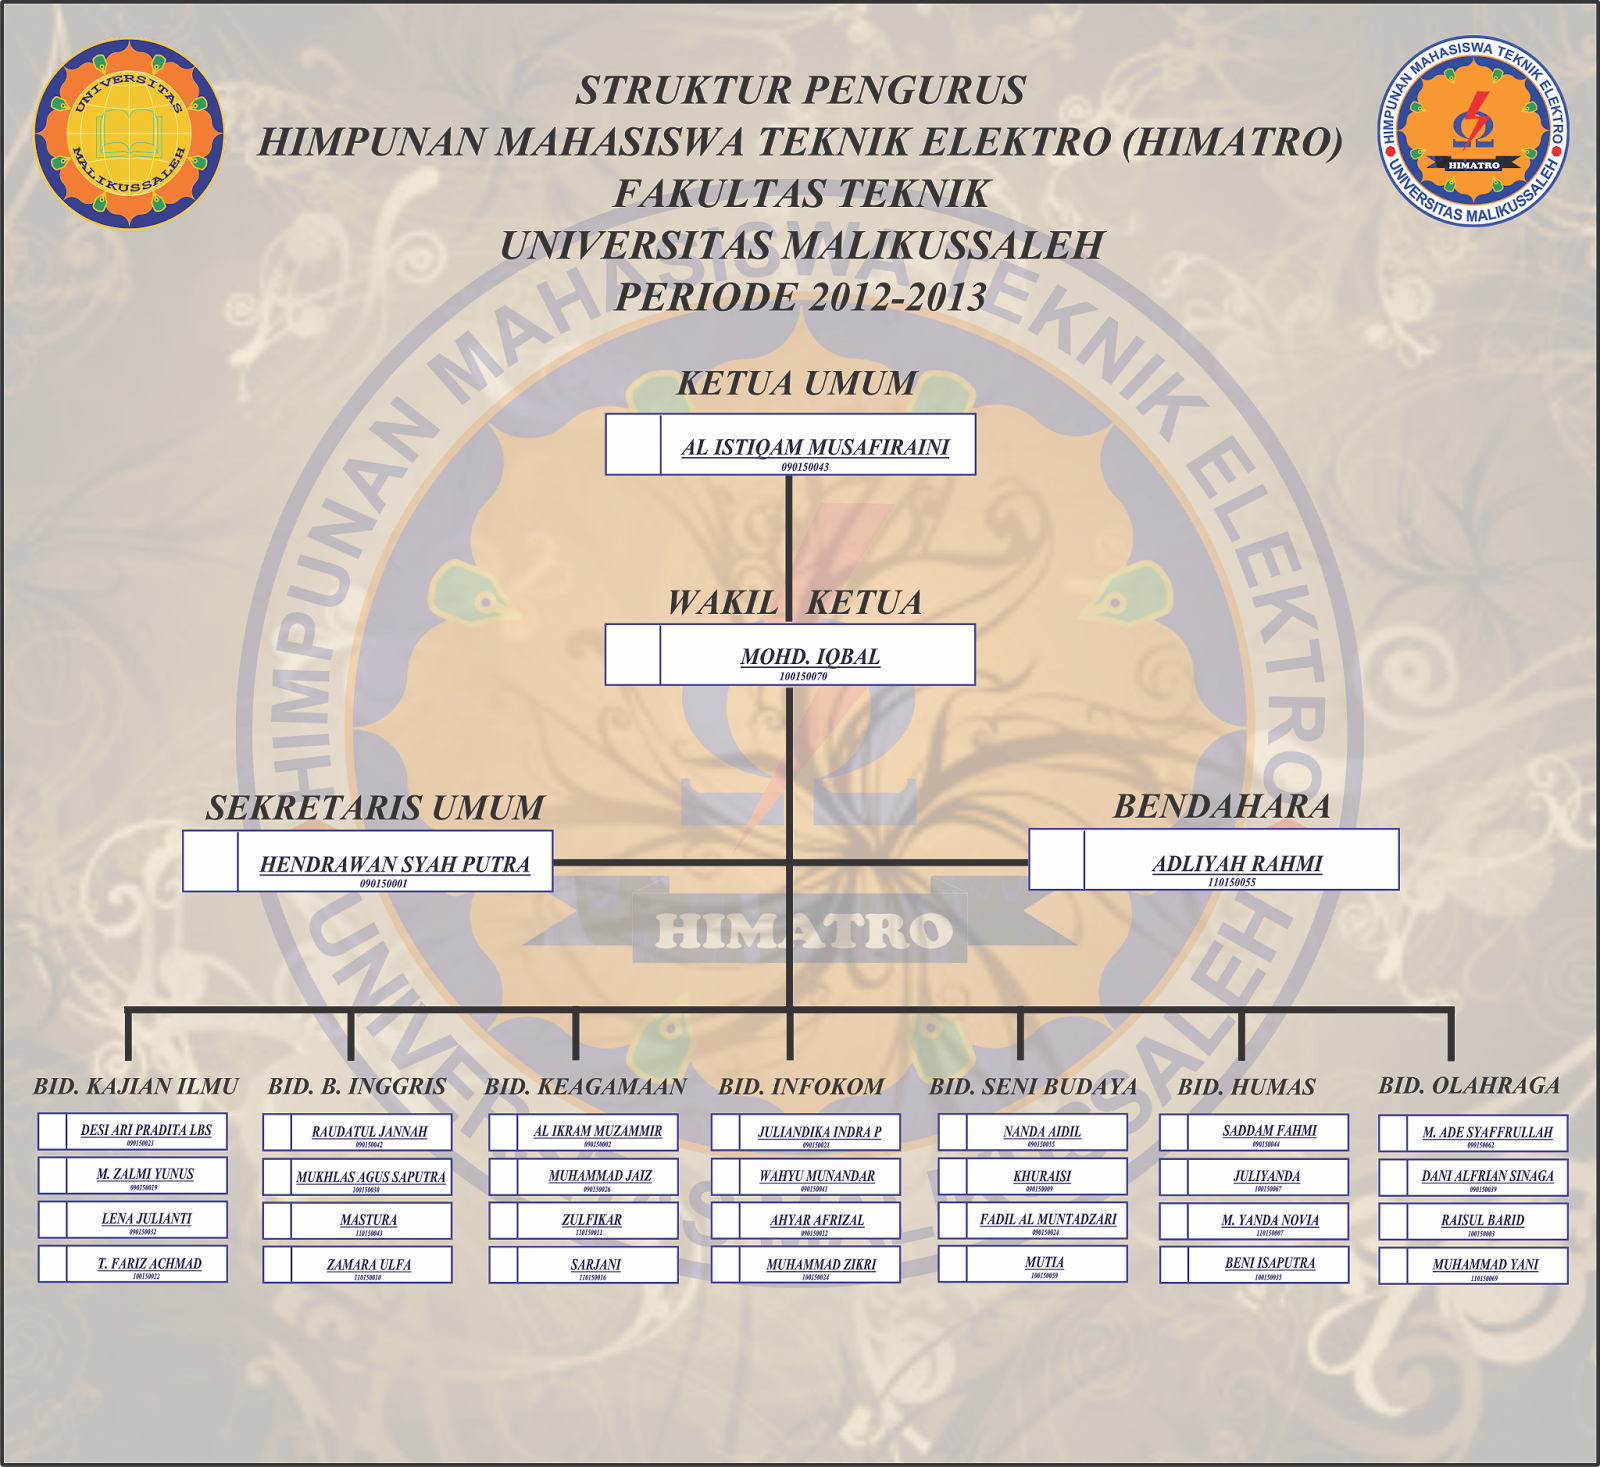 Surat Keputusan (SK) HIMATRO Periode 2012-2013  Himatro 